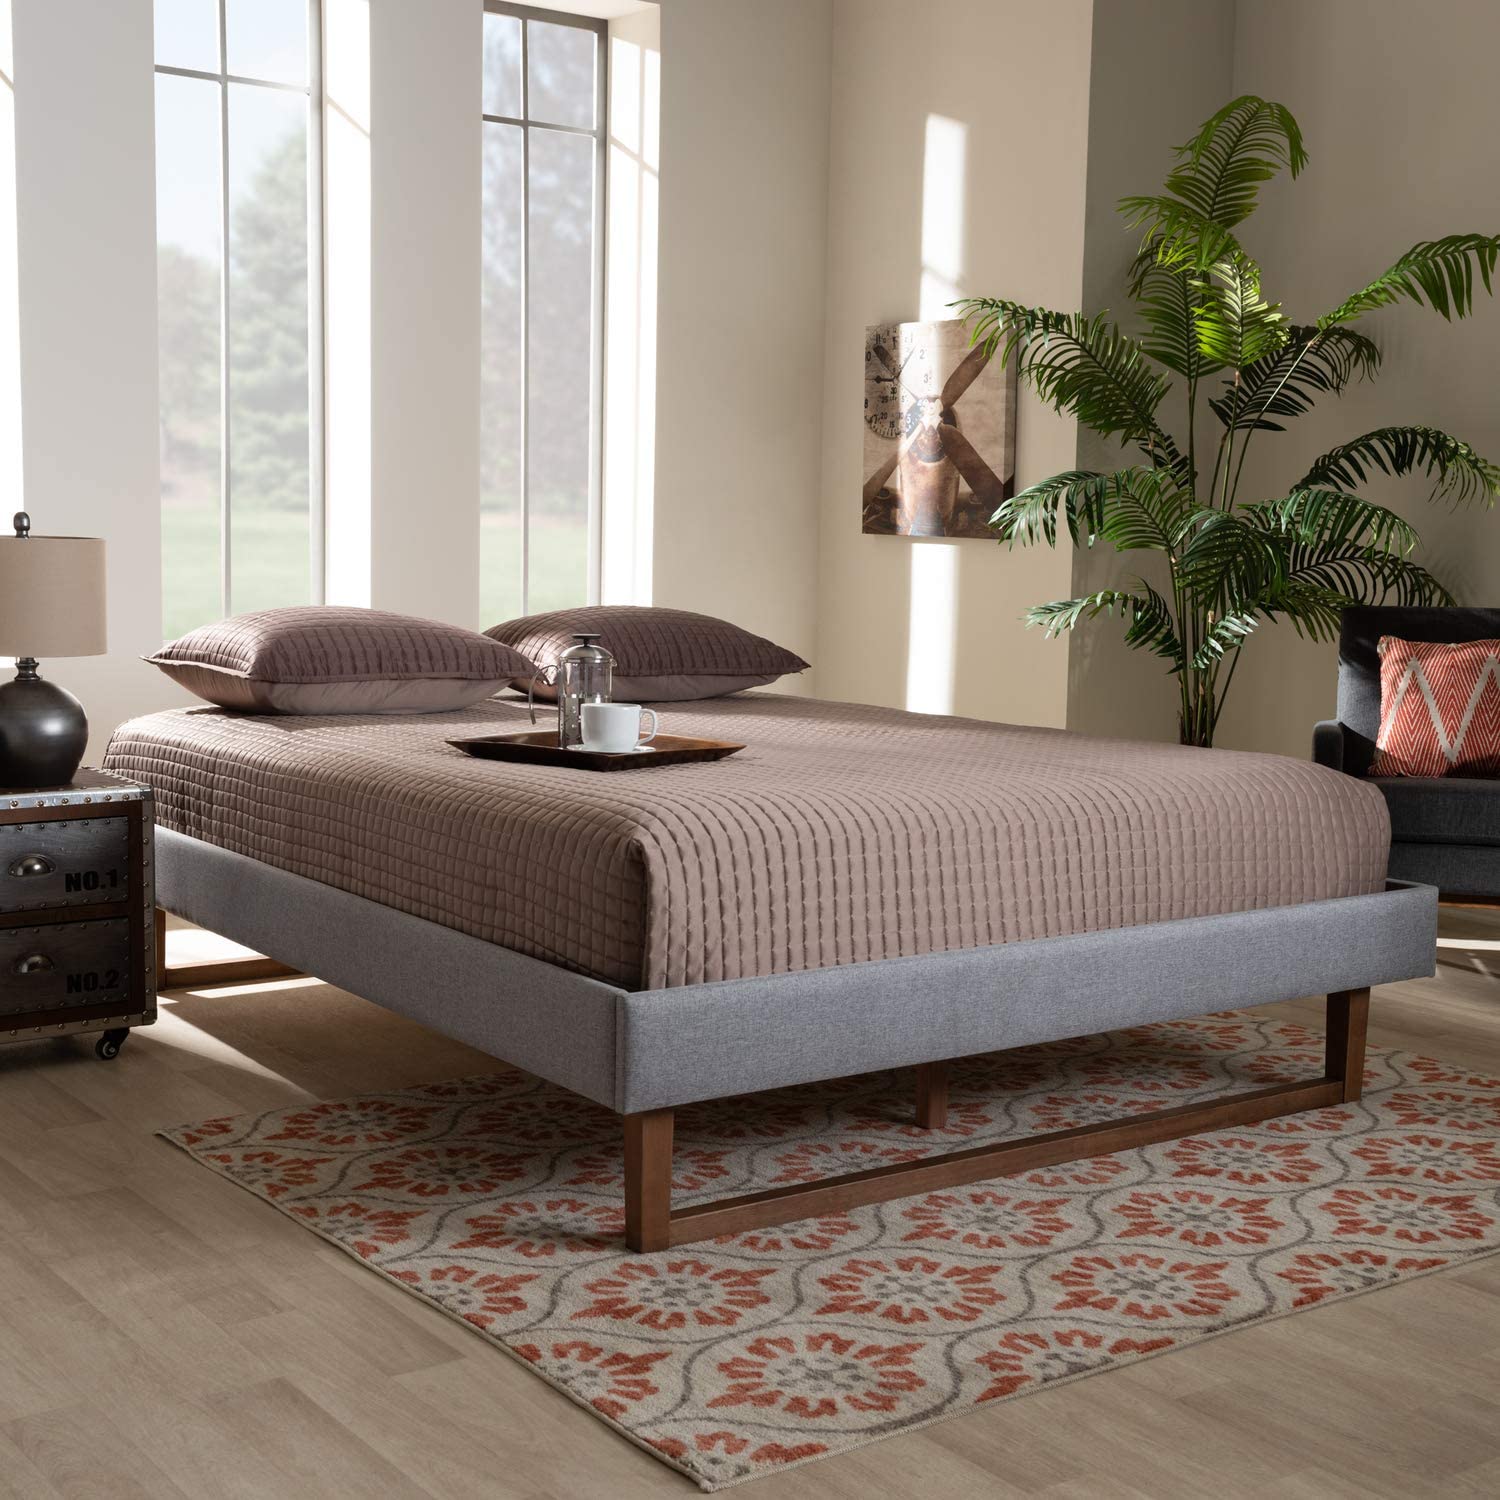 Baxton Studio Liliya Mid-Century Modern Light Grey Fabric Upholstered Walnut Brown Finished Wood Queen Size Platform Bed Frame